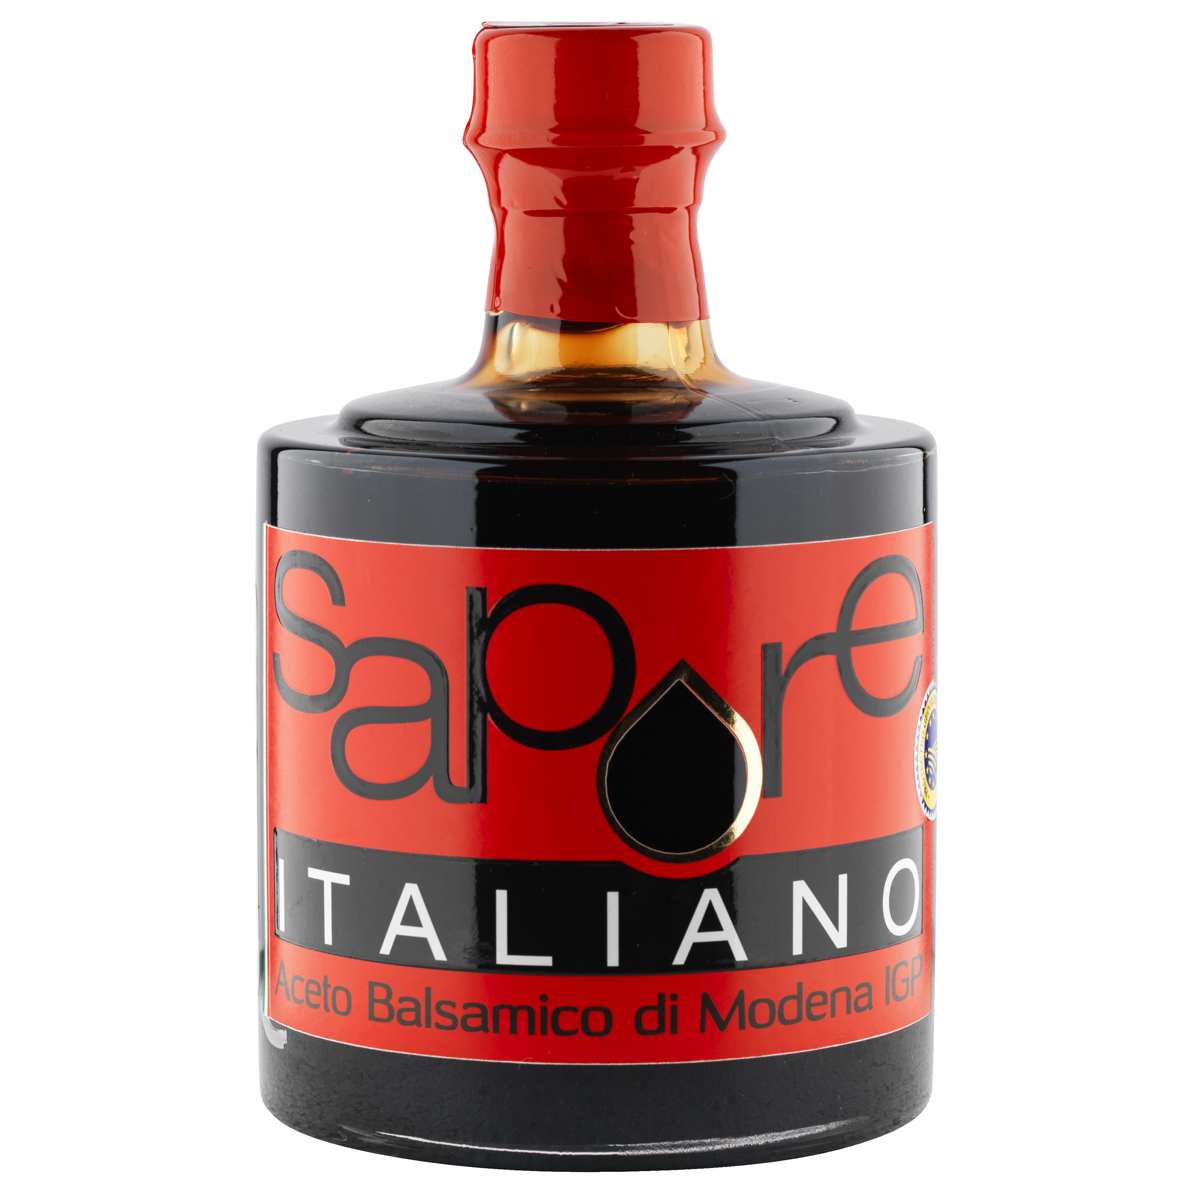 Sapore – Red Label Balsamvinäger